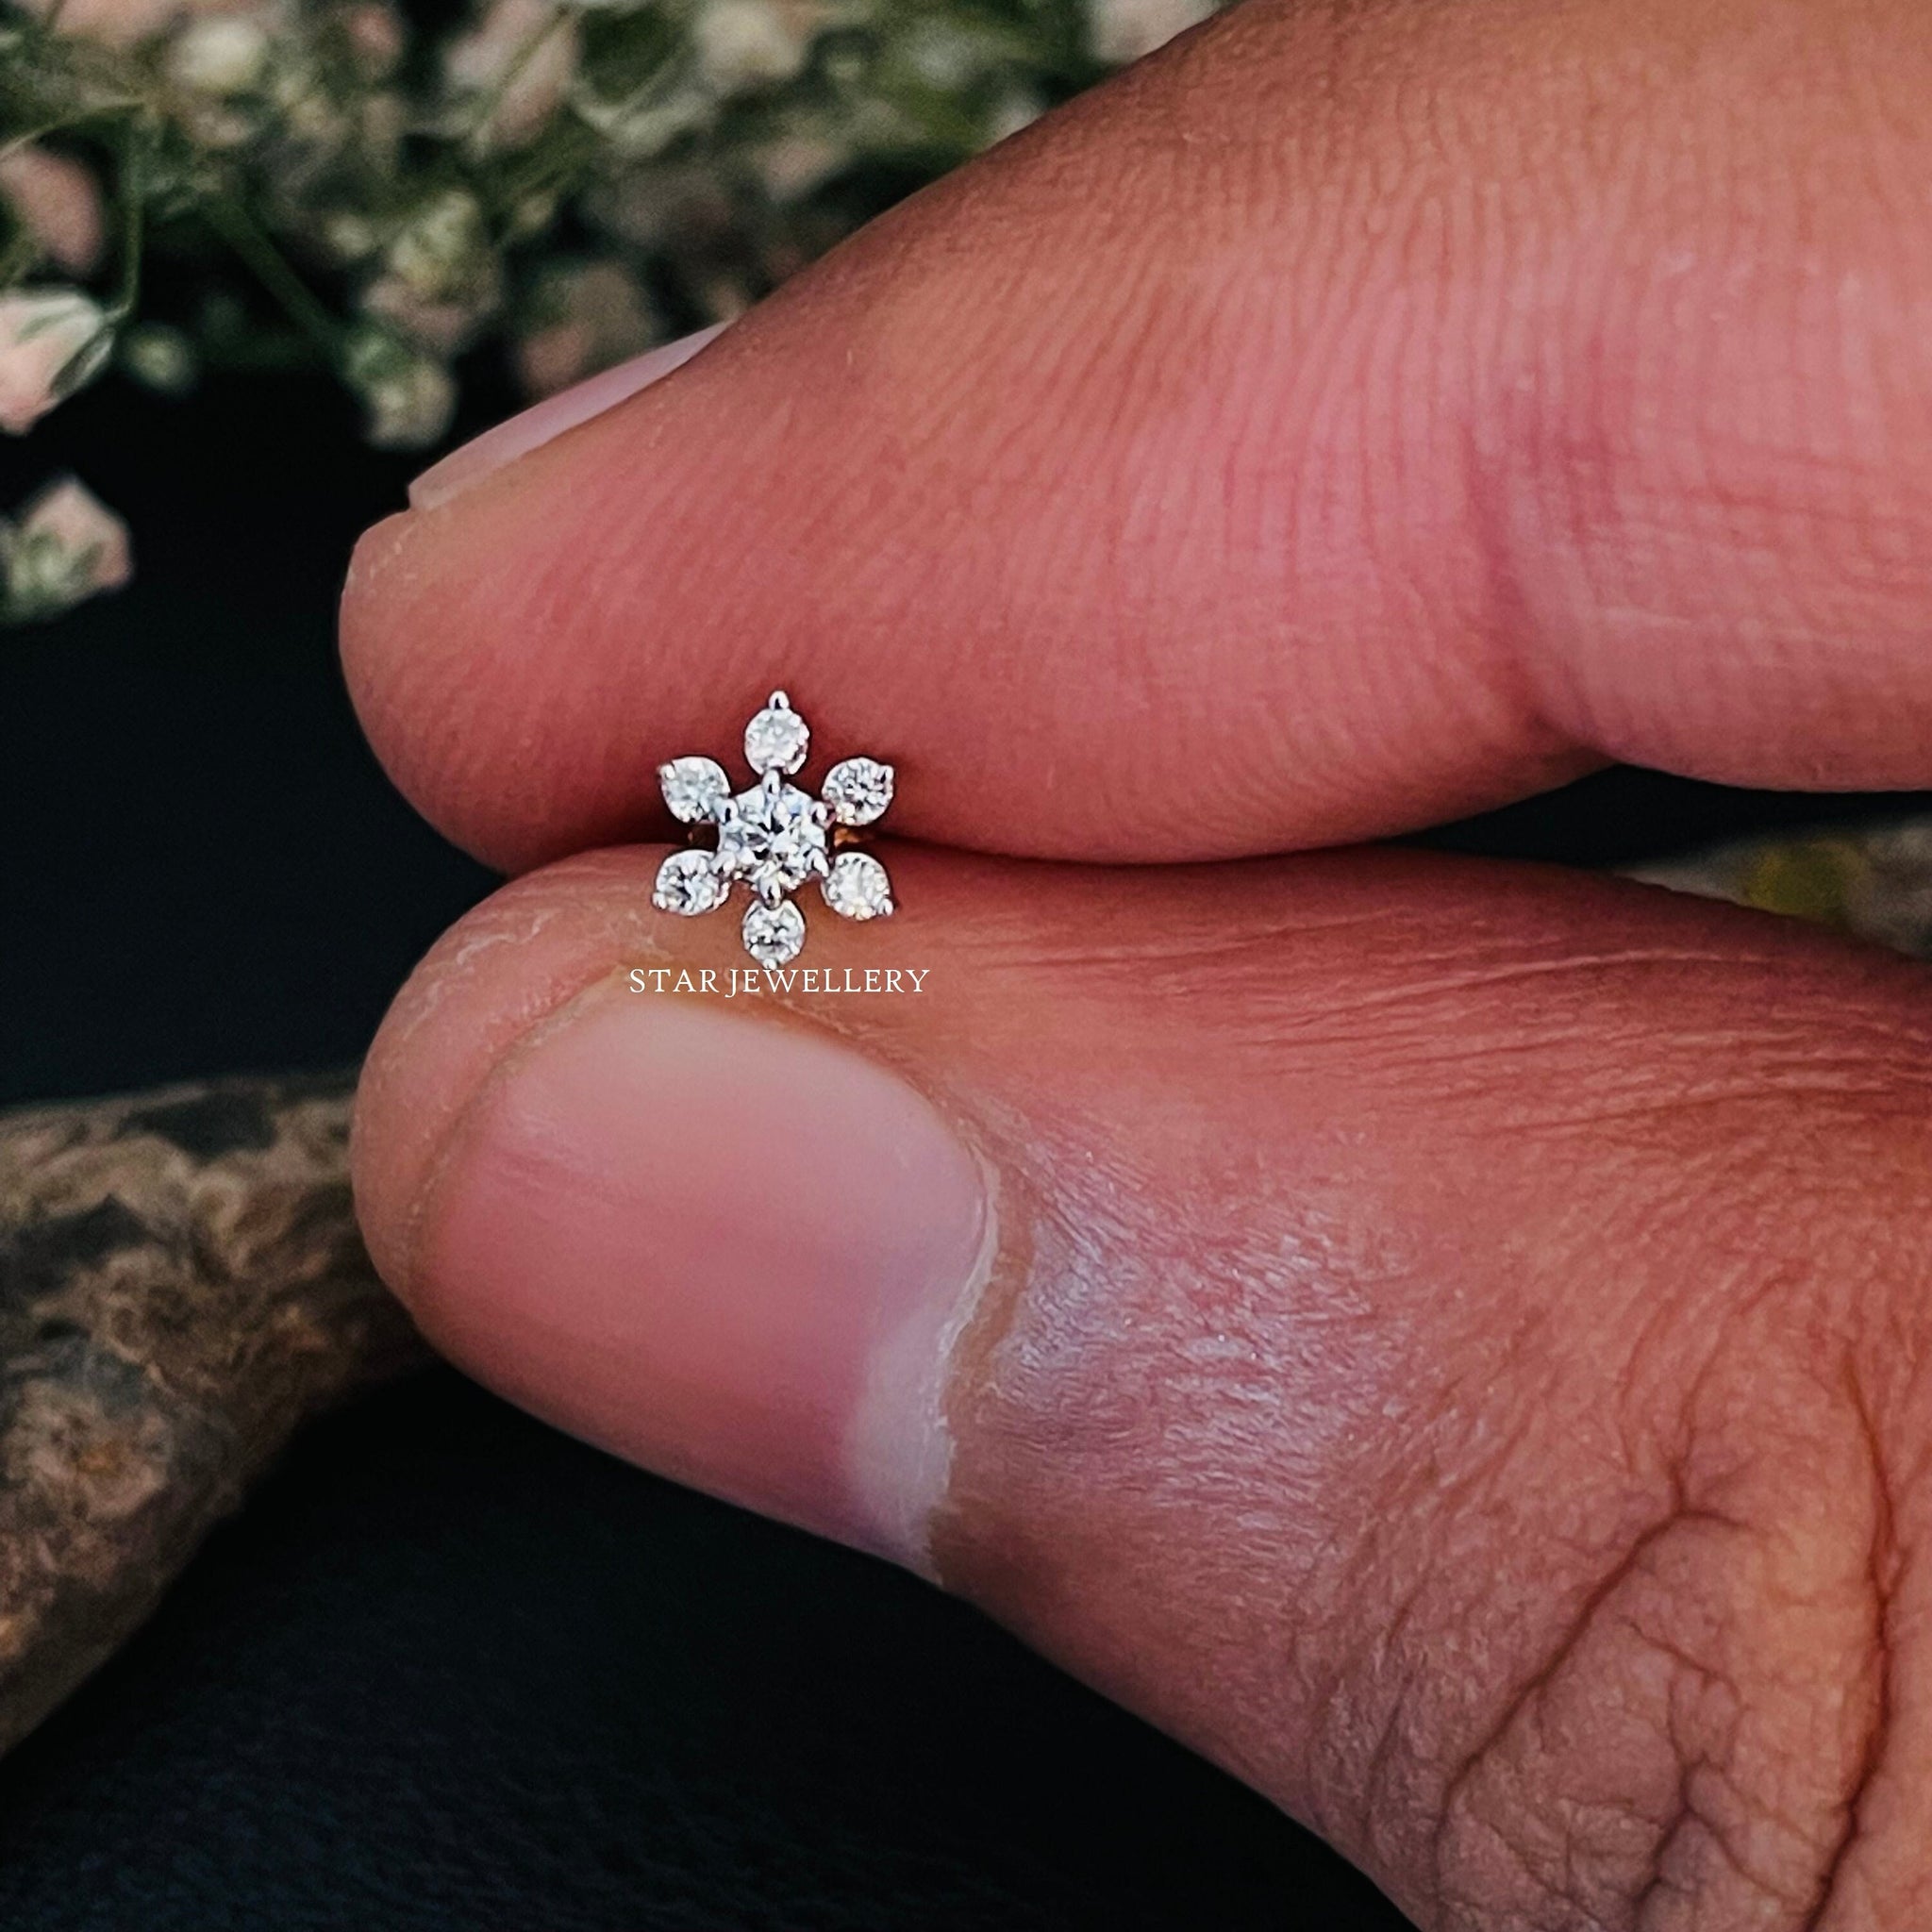 Diamant Fleur Stud pour Nez Tragus, Lobe, Conch, 14K Gold Seven Diamond Cluster Floral External Threaded Pin, Piercing Jewelry, Conch